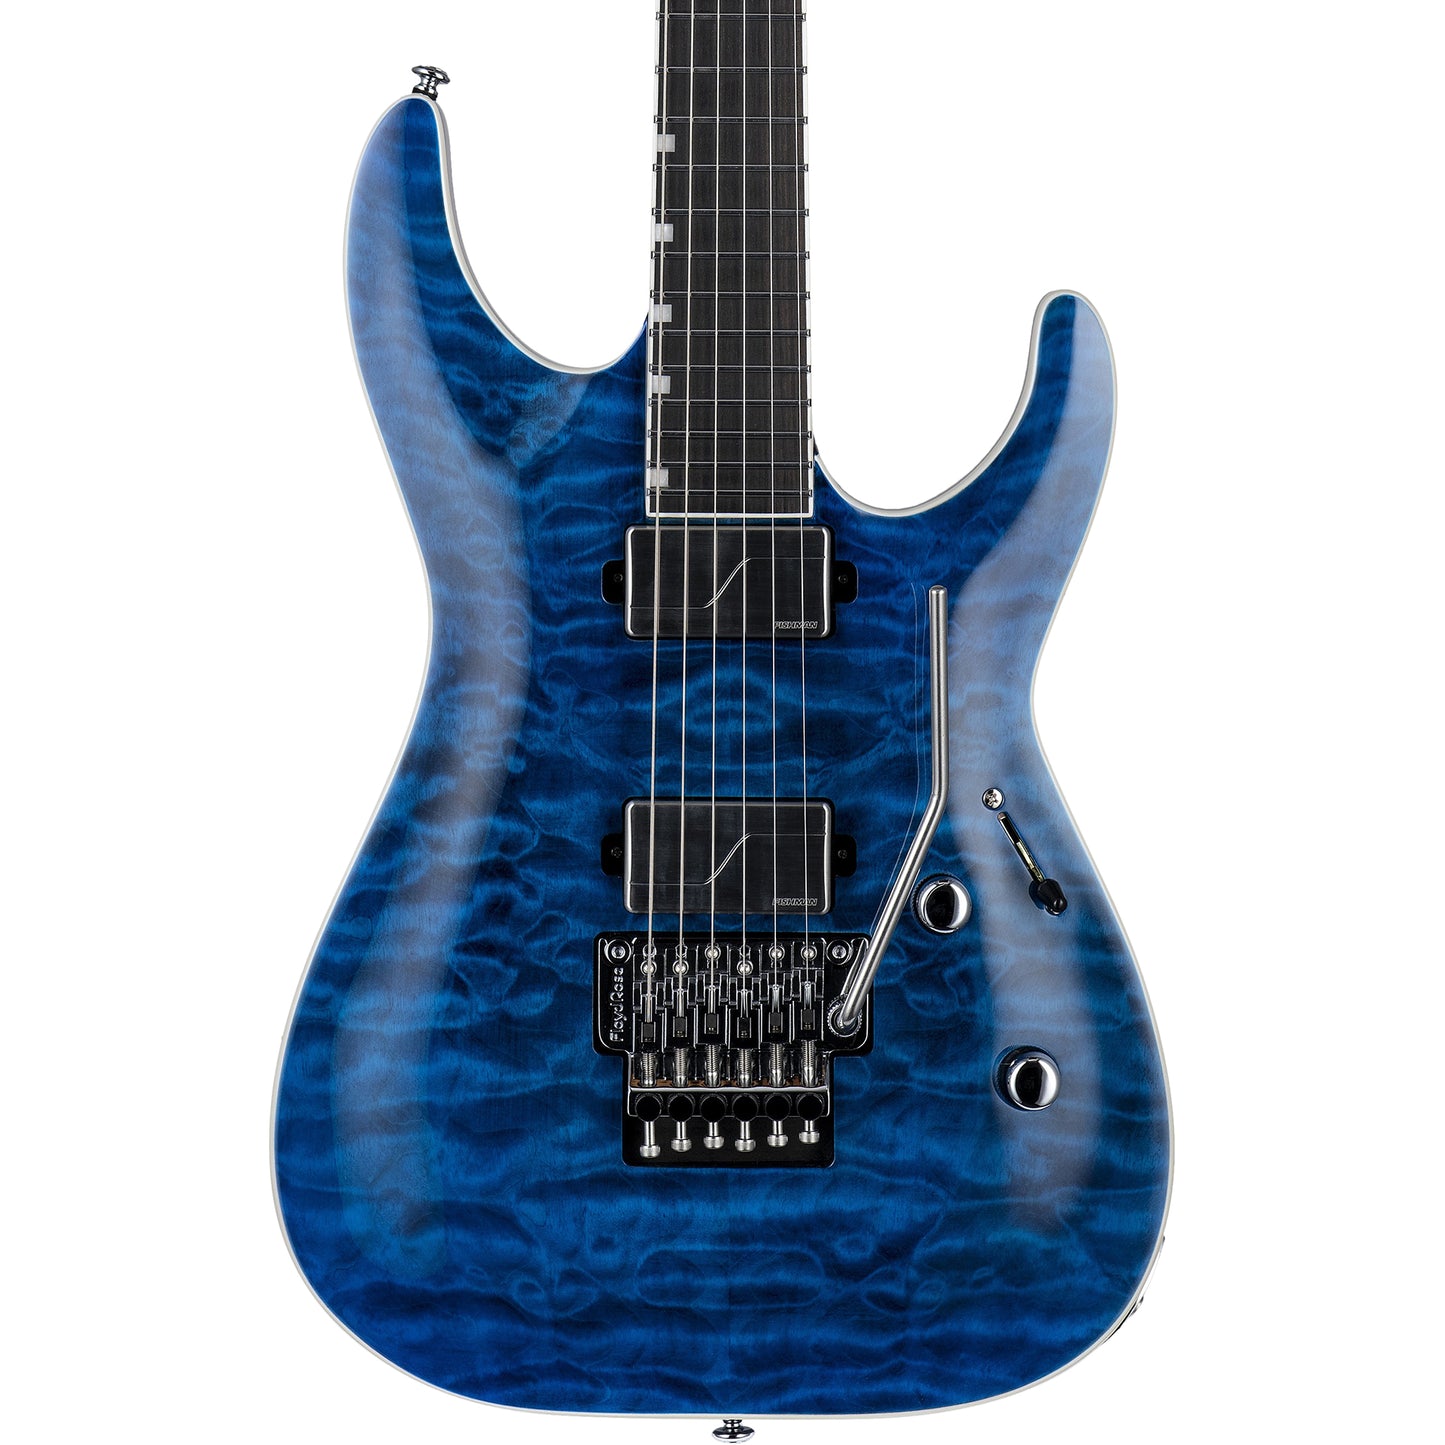 ESP LTD MH-1000 Electric Guitar, Black Ocean